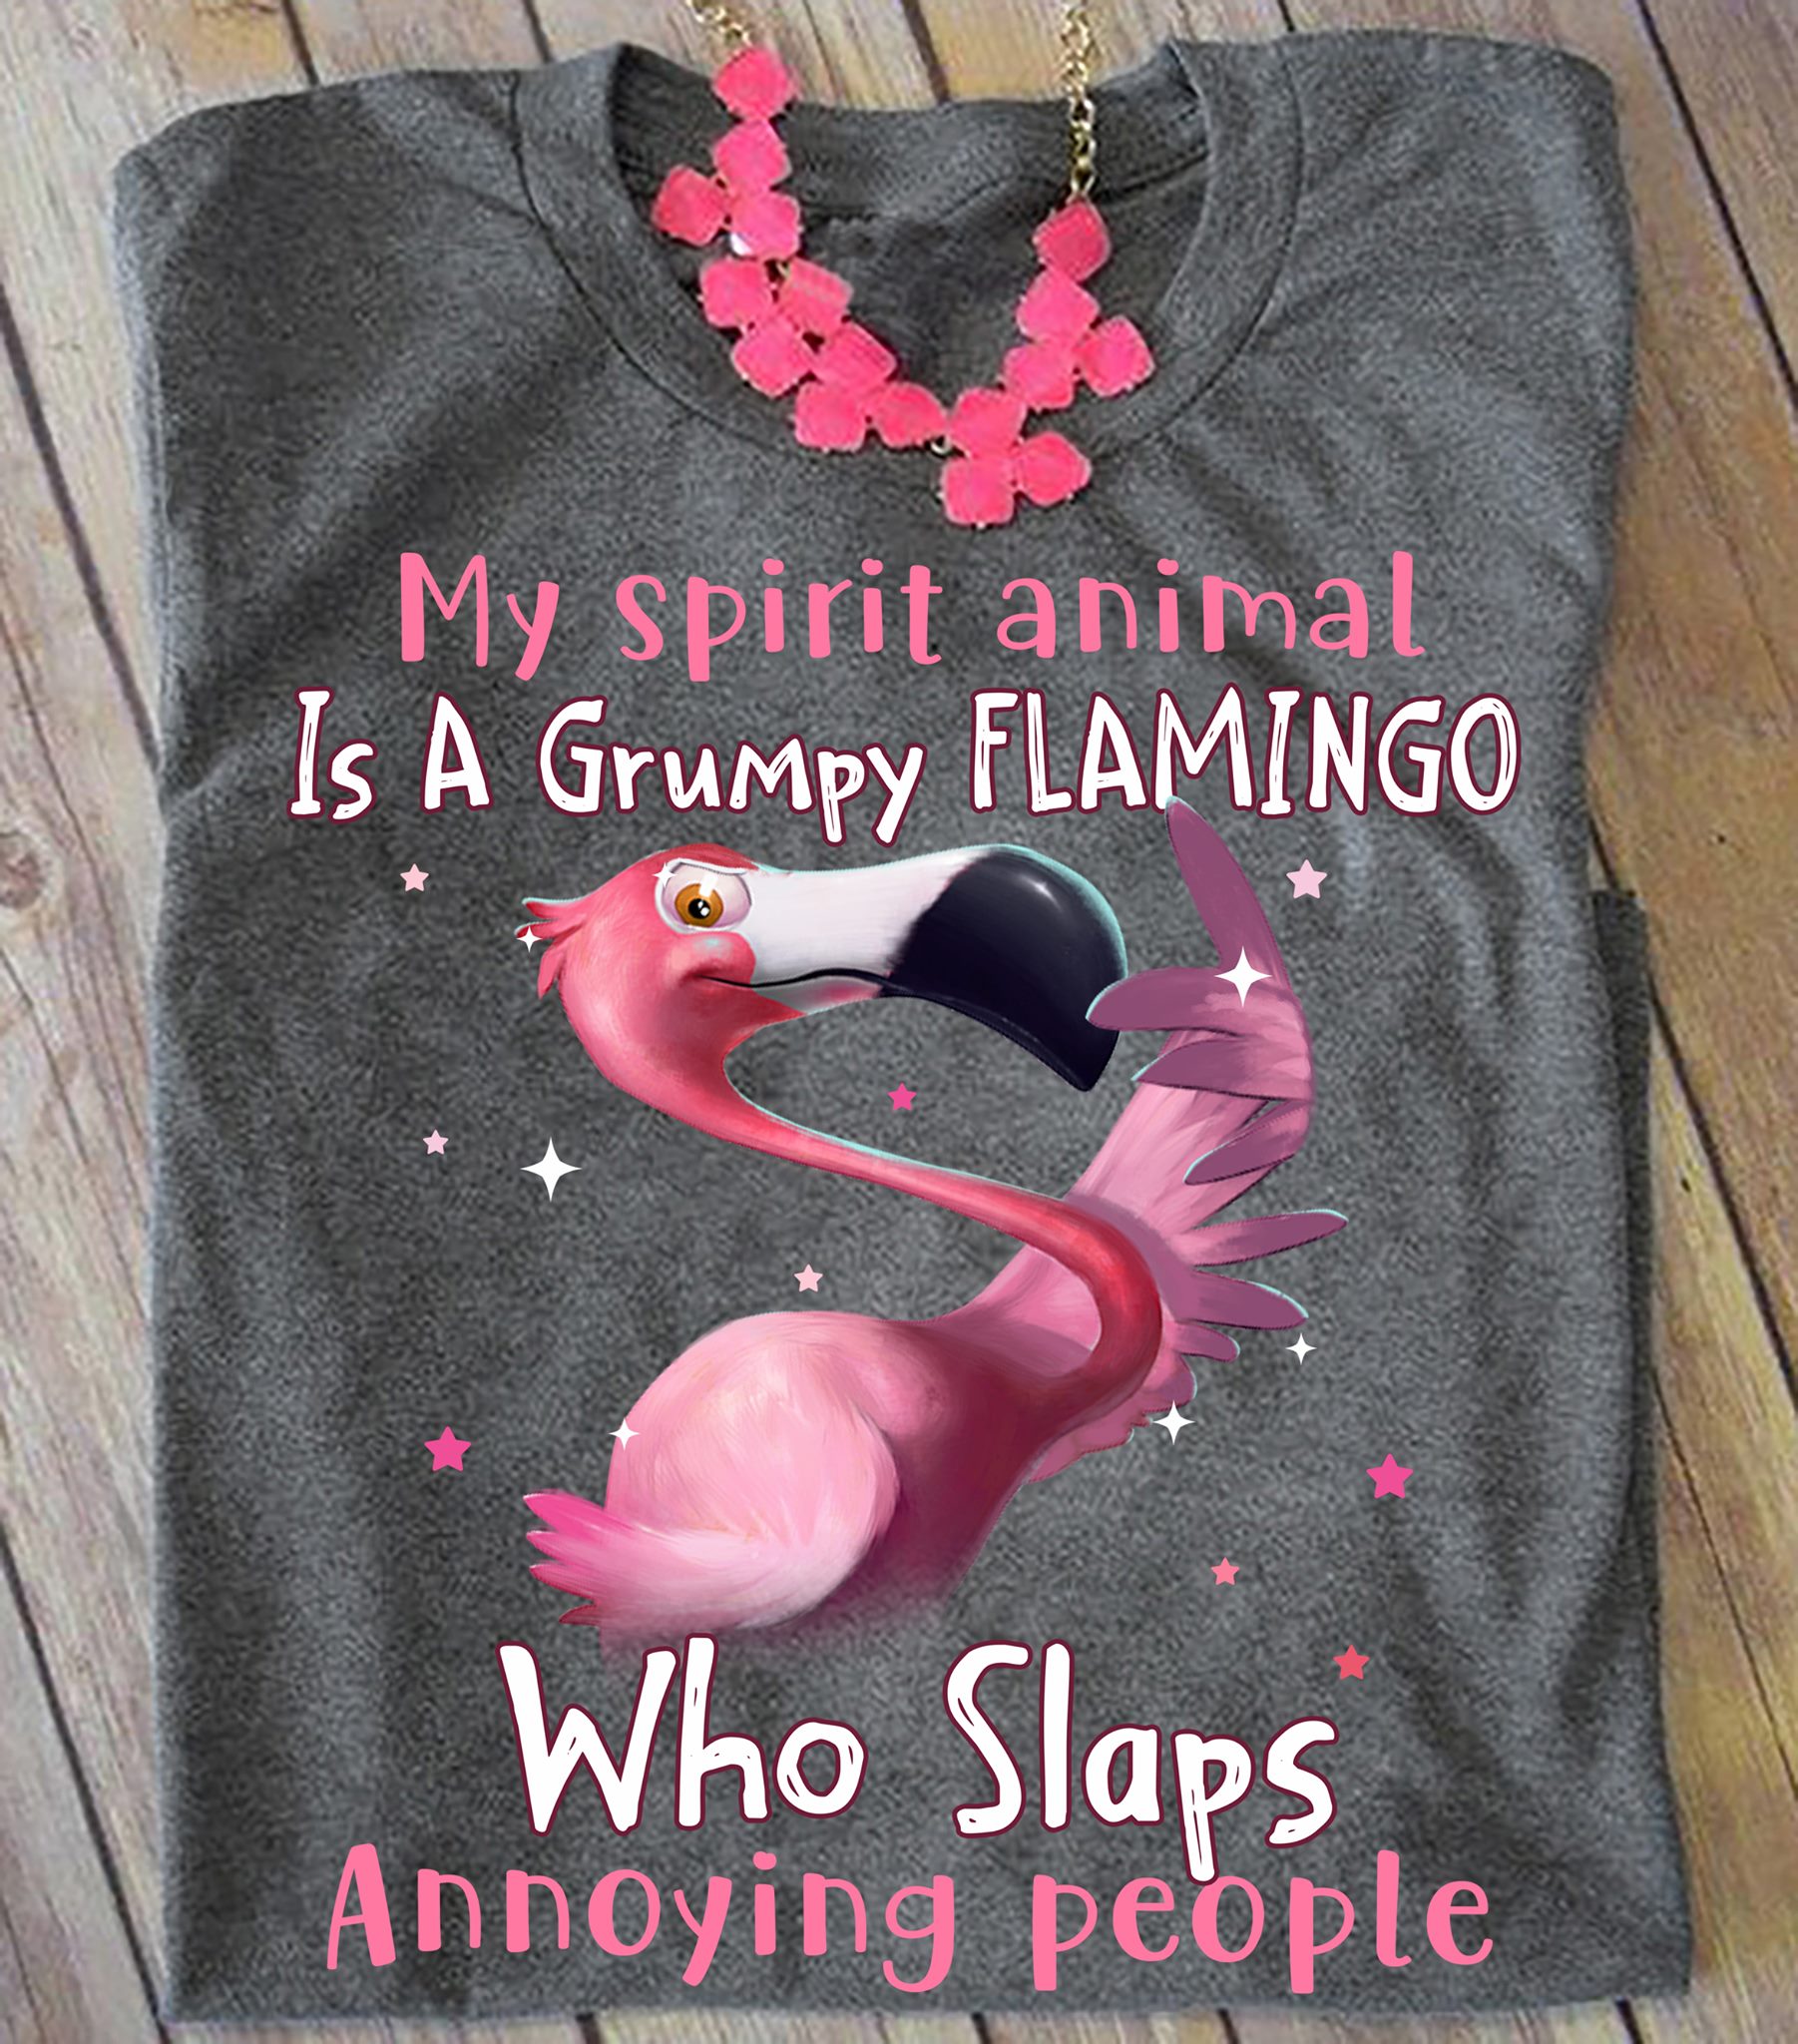 My spirit animal is a grumpy flamingo who slaps annoying people